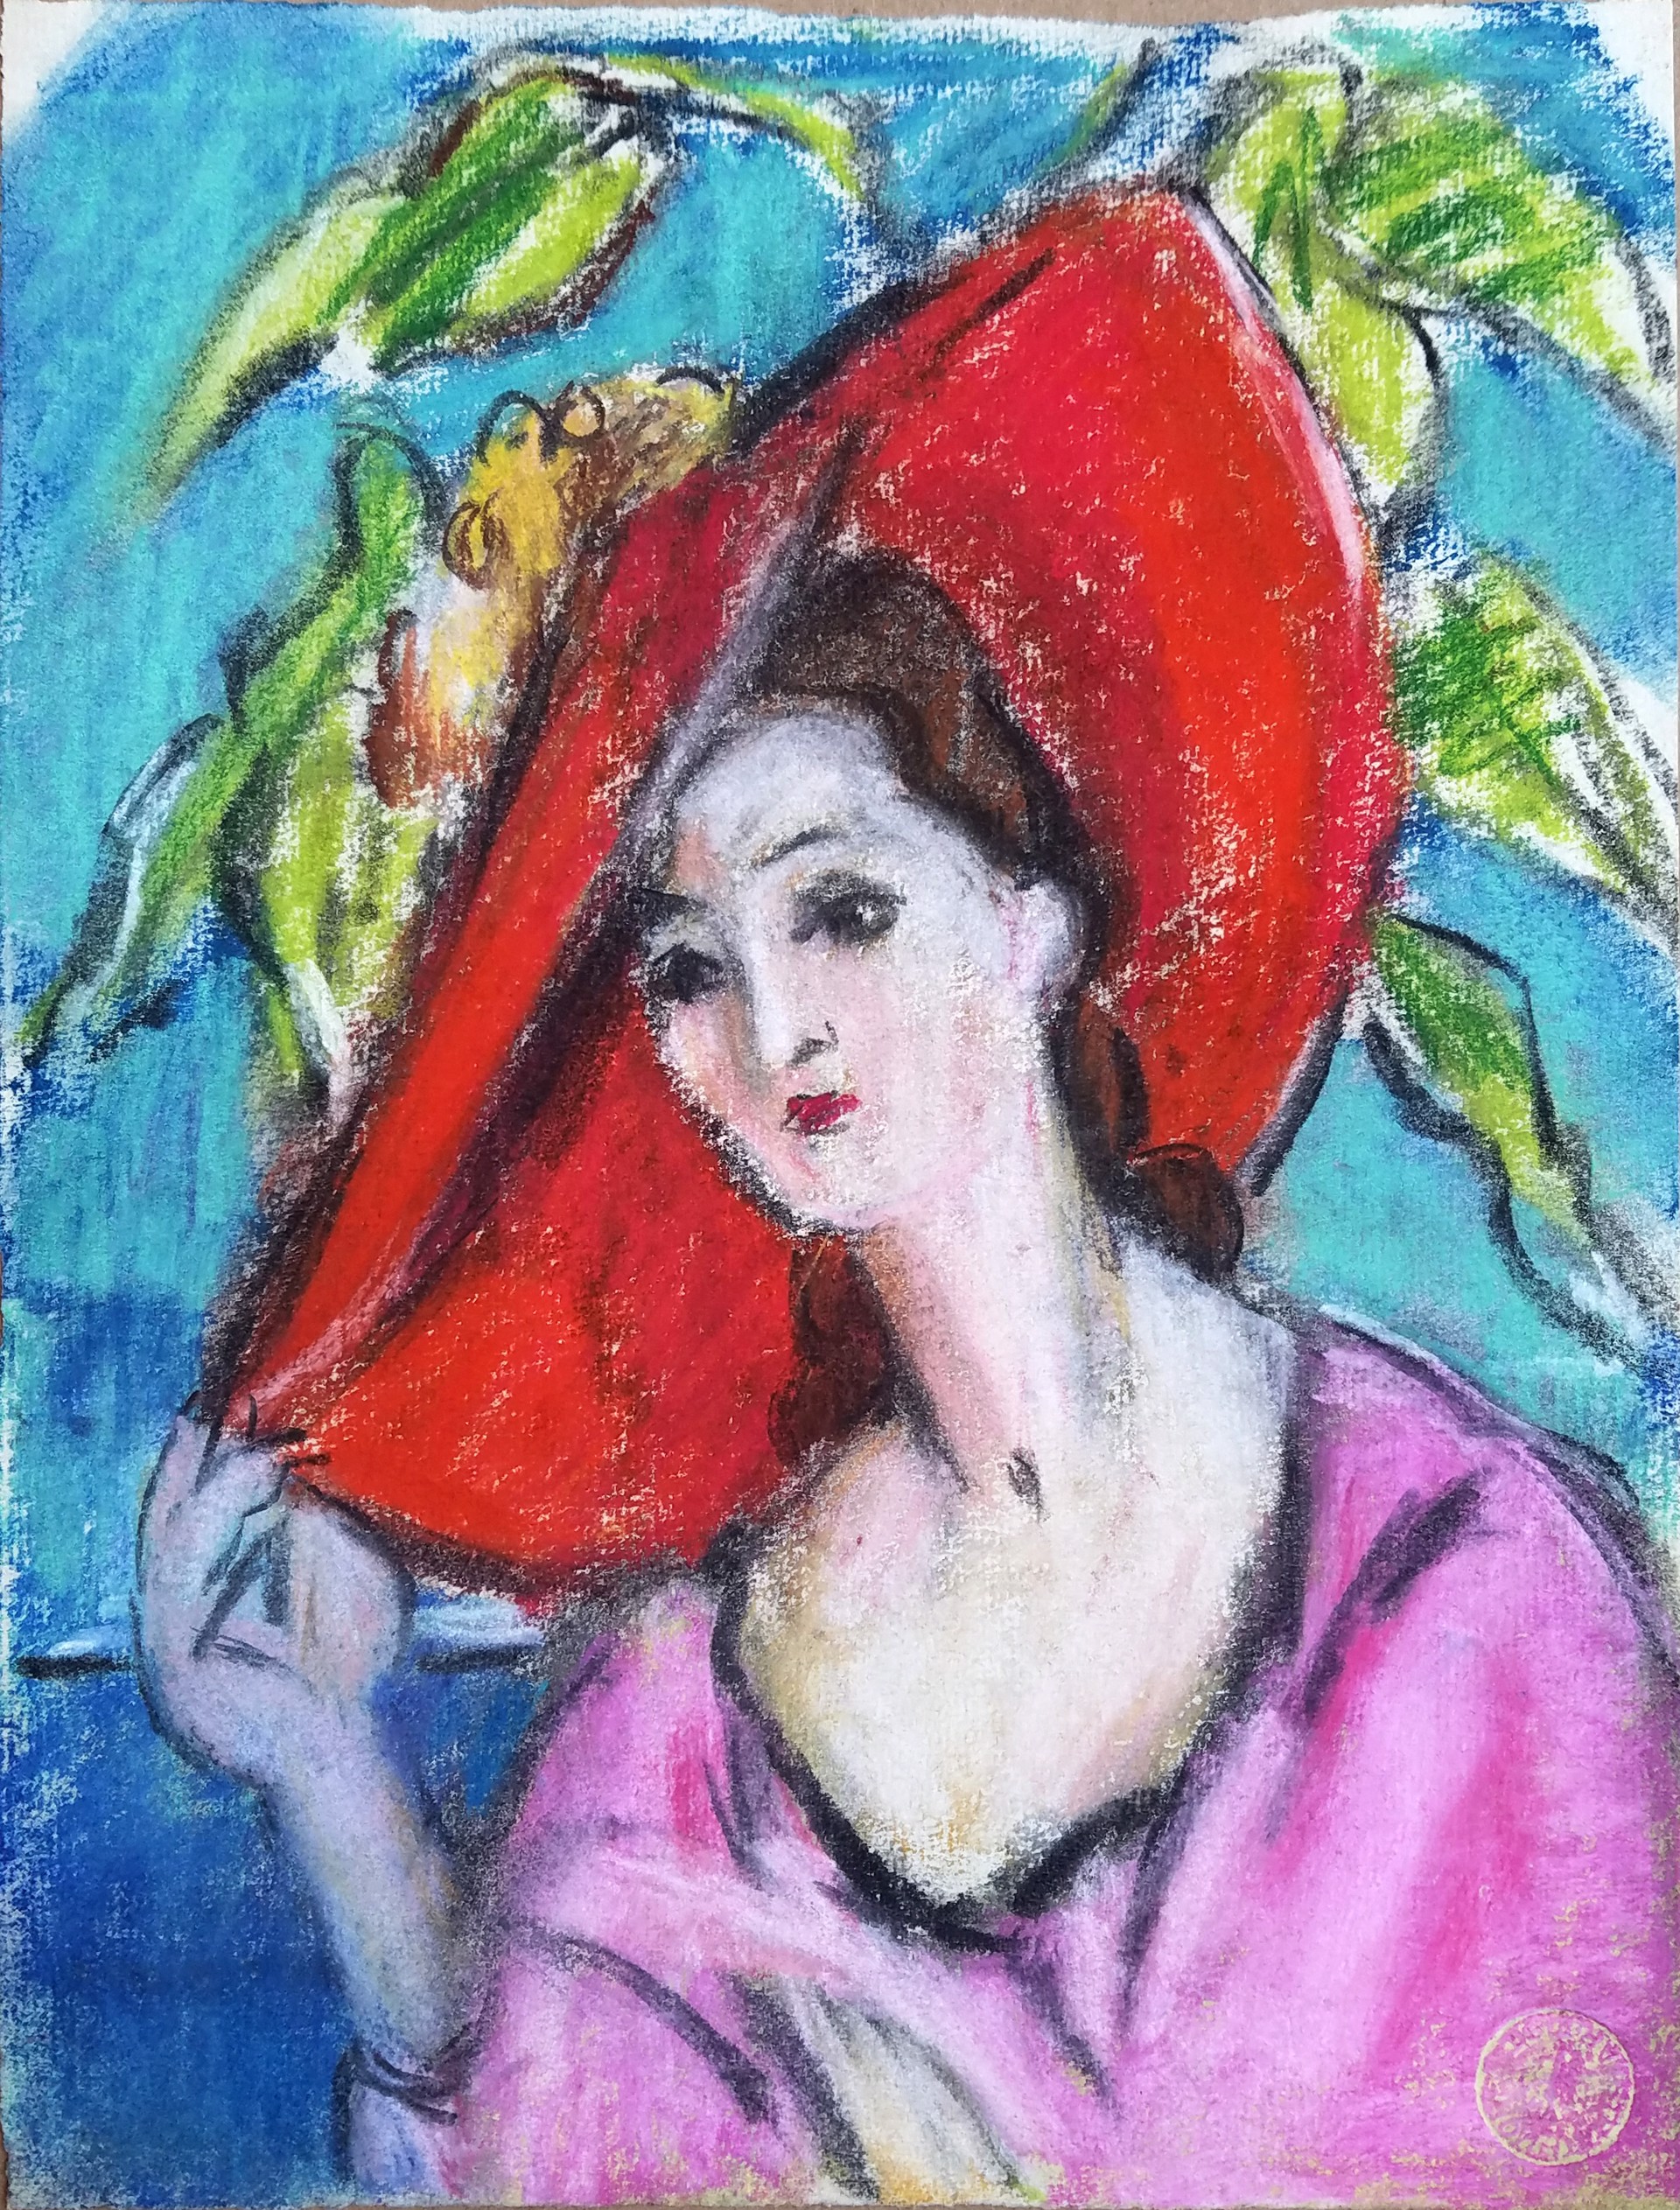 Self-Portrait with Hat by Anna Walinska